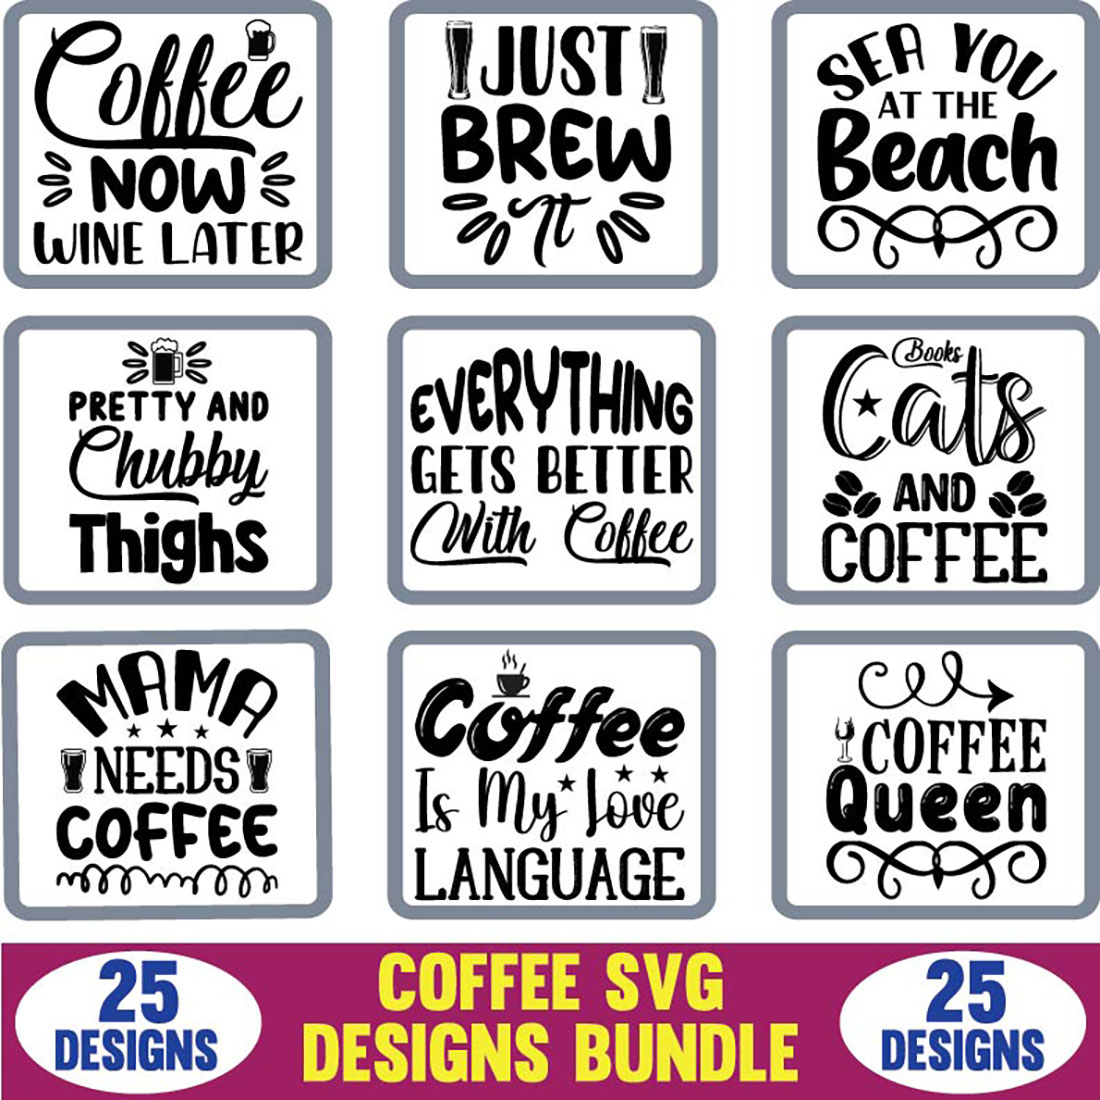 Coffee SVG Designs Bundle cover image.